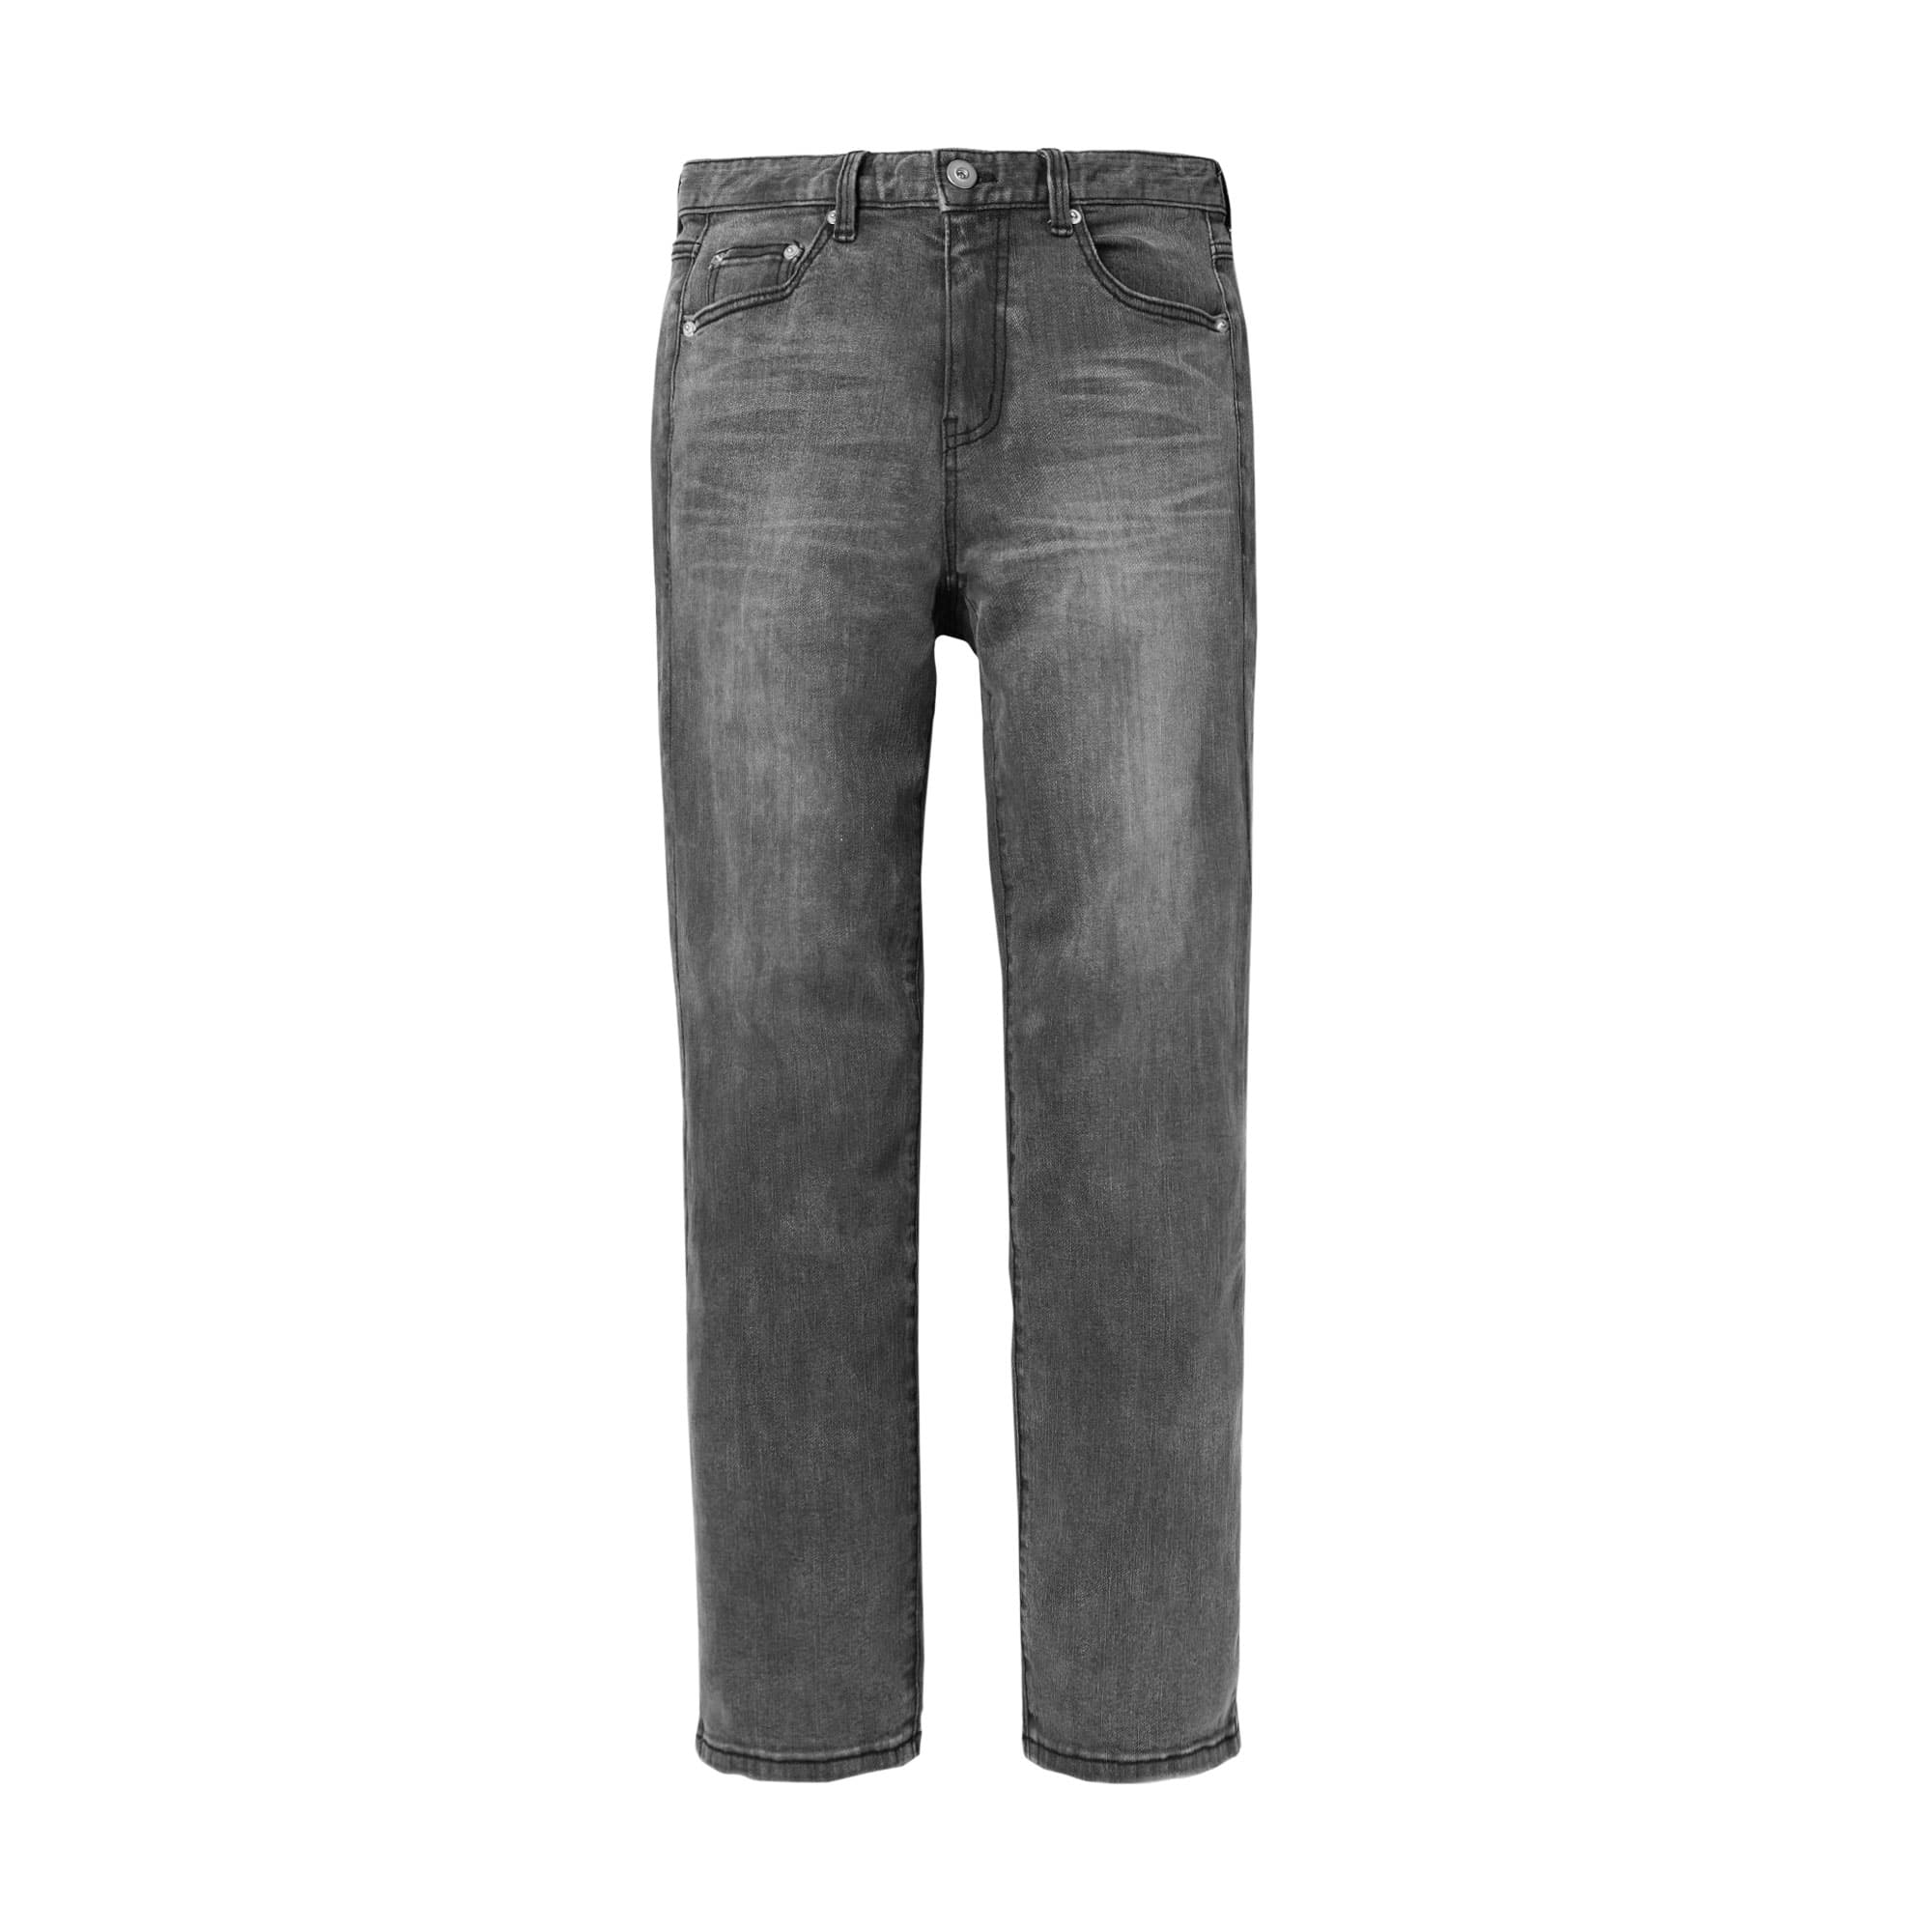 comfort slim jeans / gray